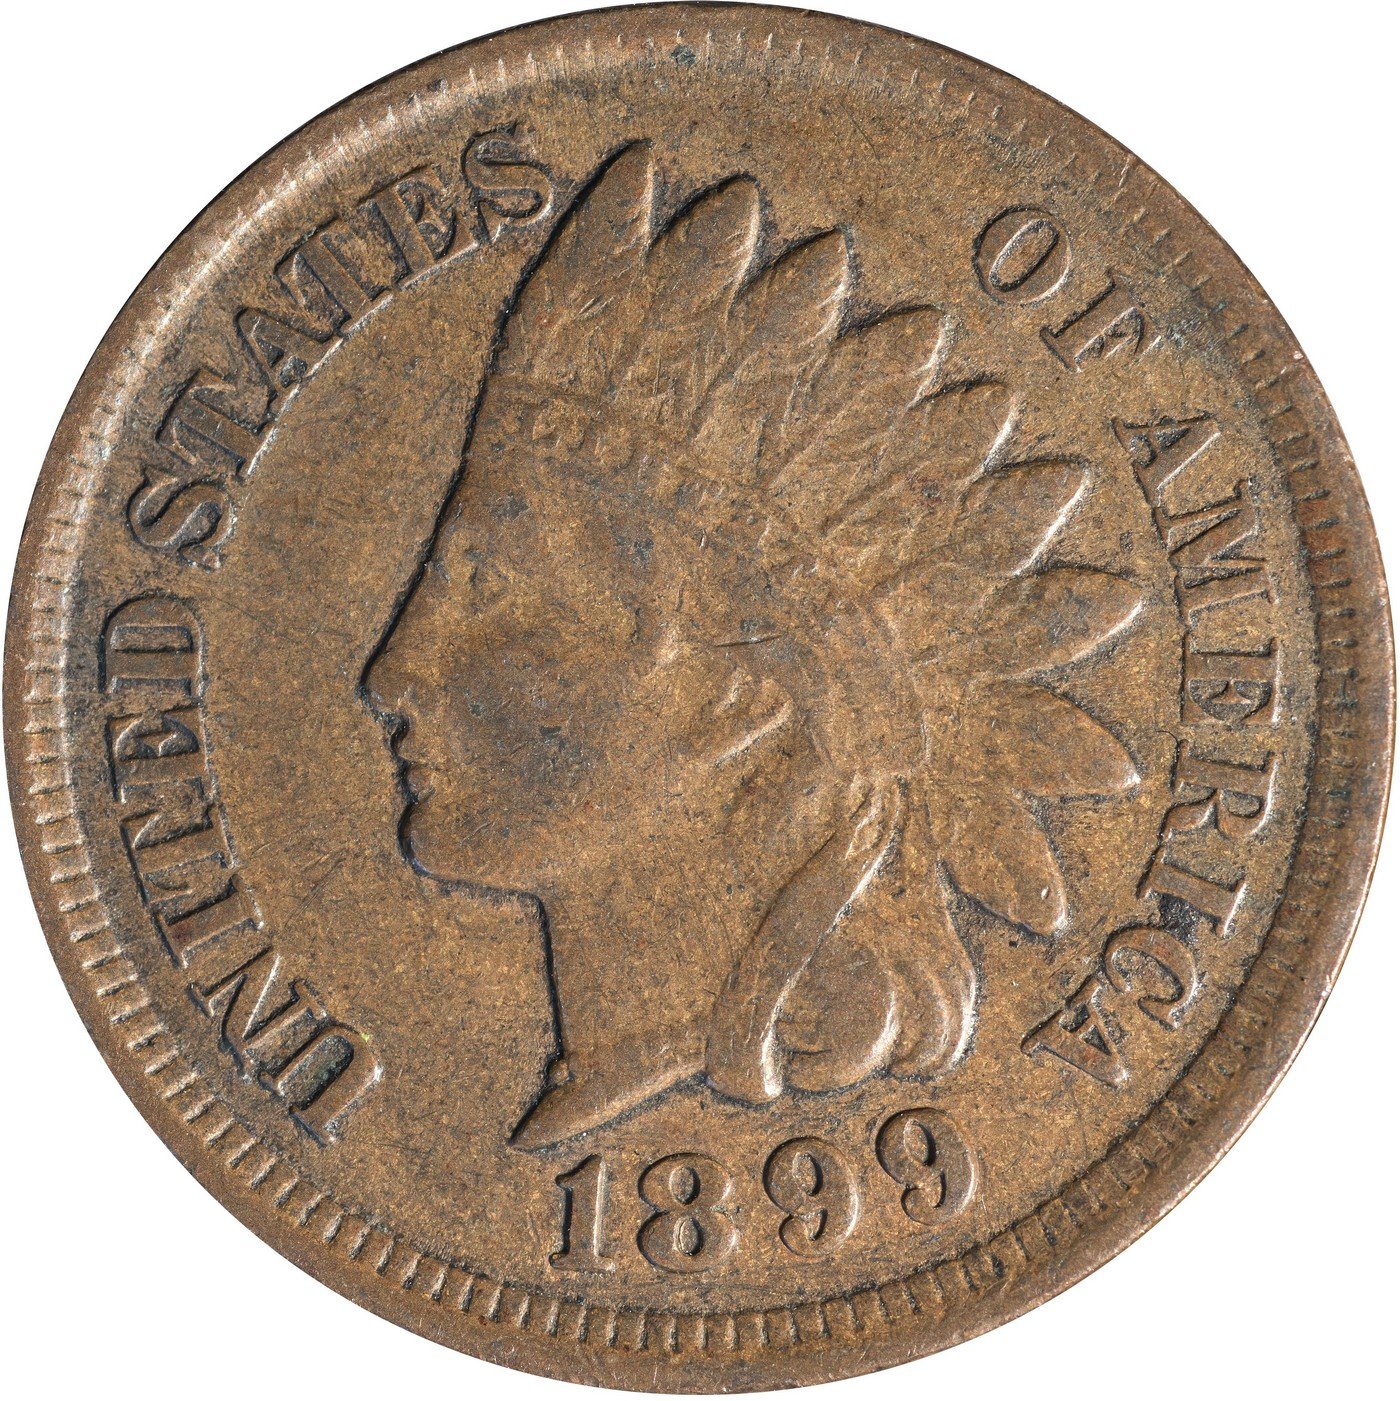 1899 RPD-027 Indian Head Penny - Photo by Kurt Story